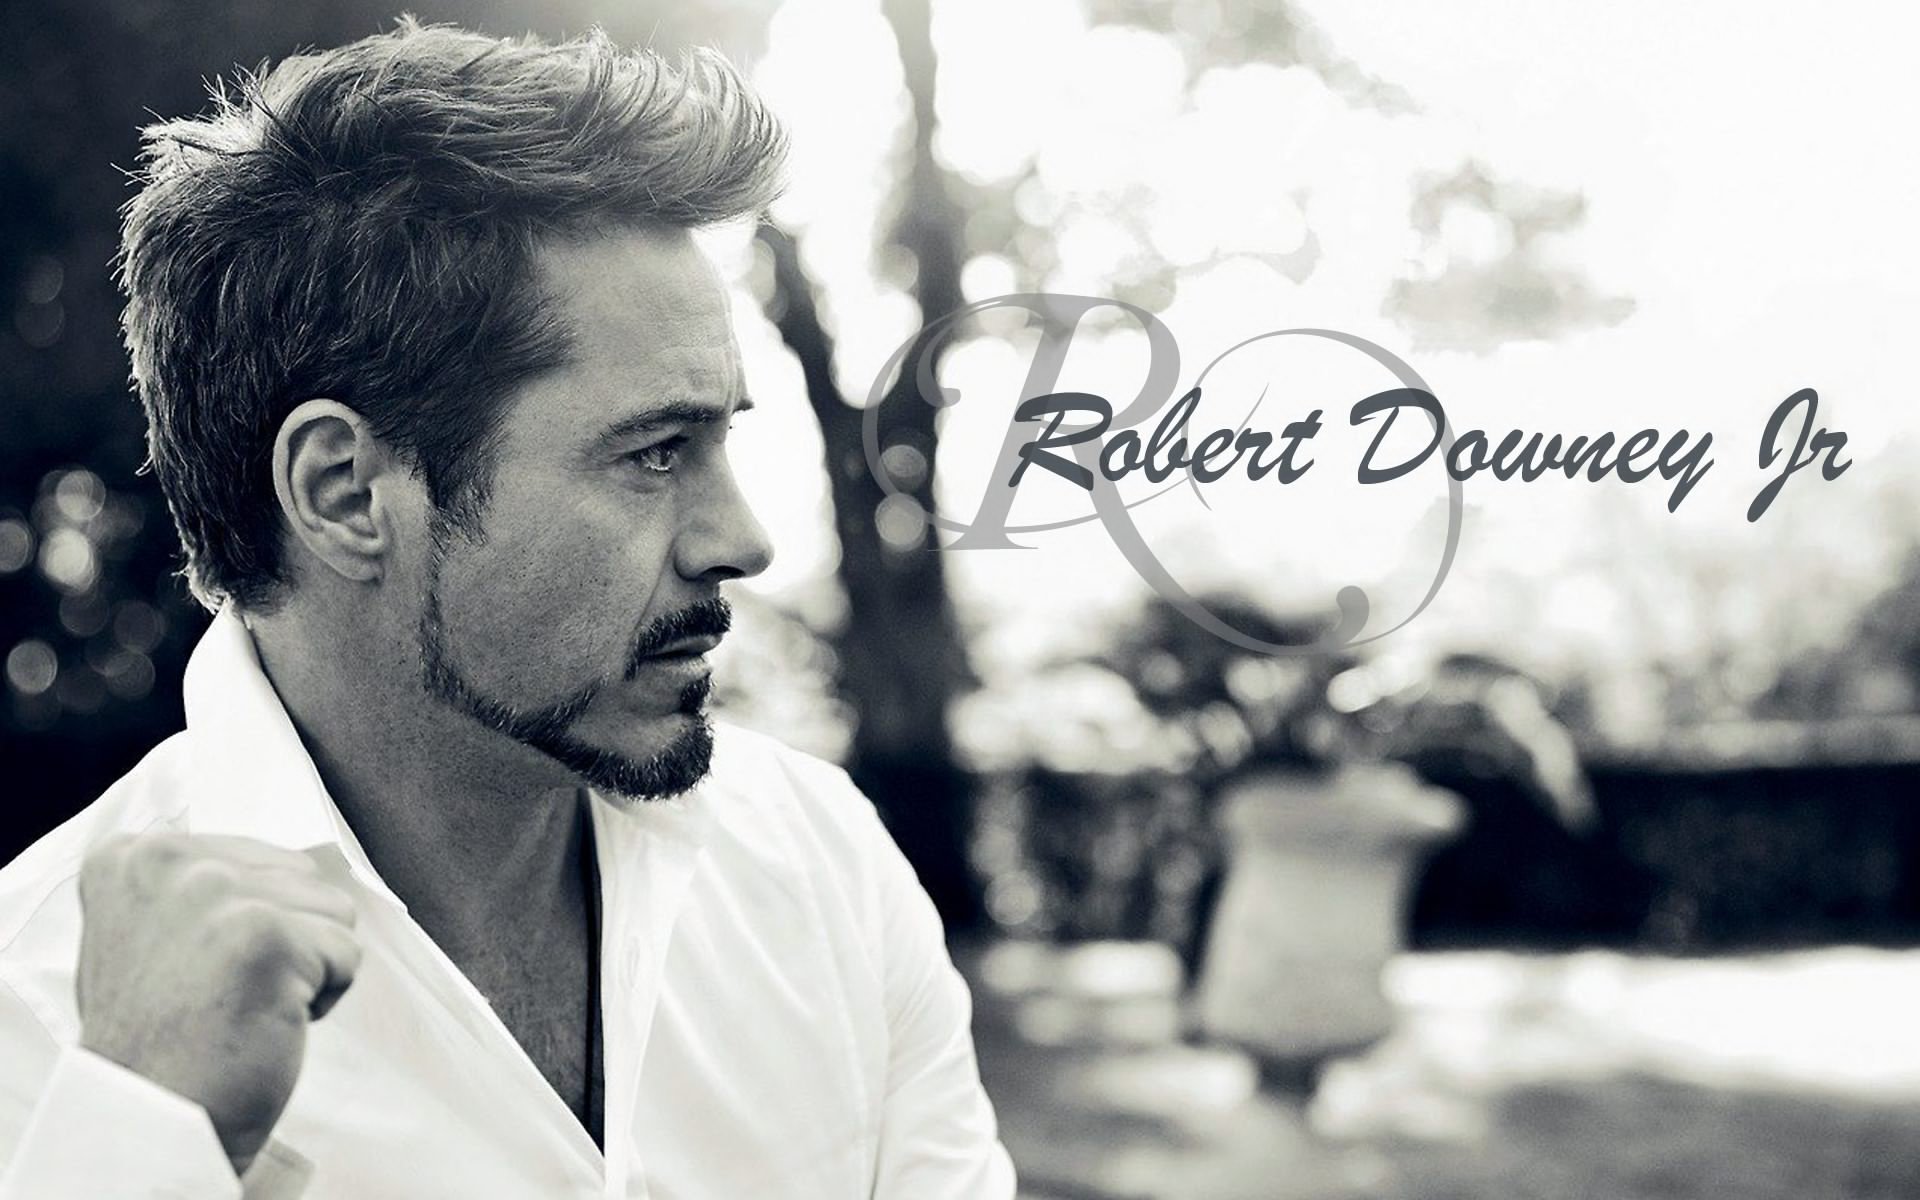 Happy birthday  Robert Downey Jr Sir
Our 